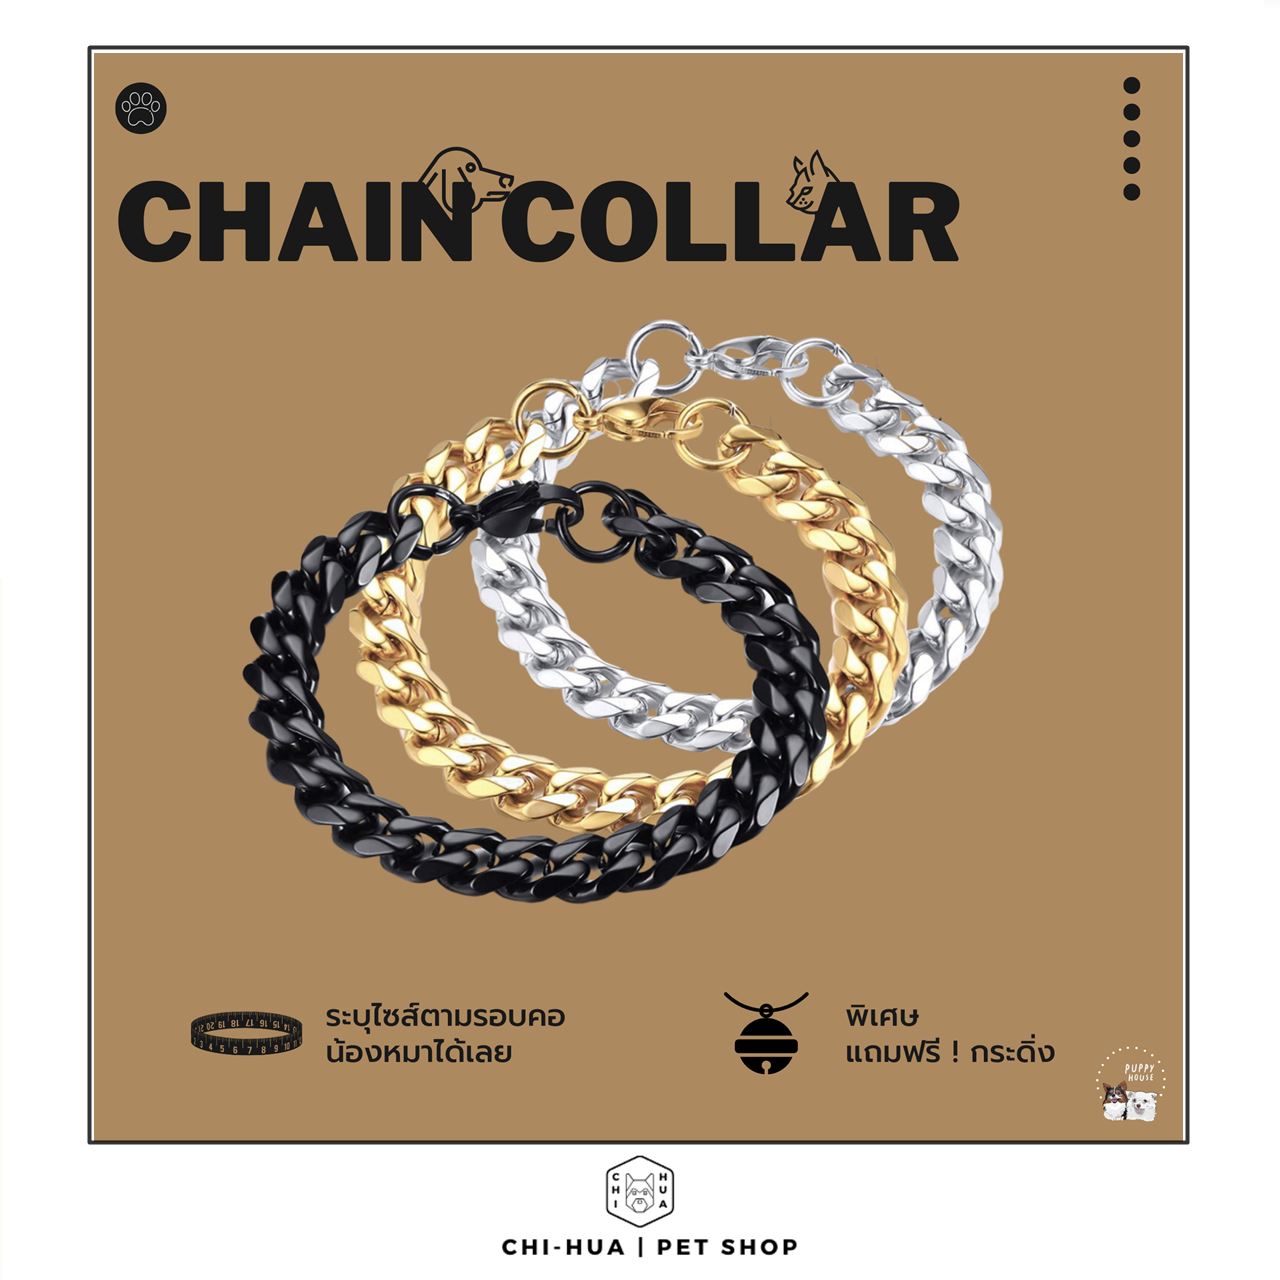 Chain Collar สร้อยคอสัตว์เลี้ยง (ลูกค้าสามารถระบุไซส์ตามรอคอสัตว์เลี้ยงได้เลข) แถมฟรี!!กระดิ่ง